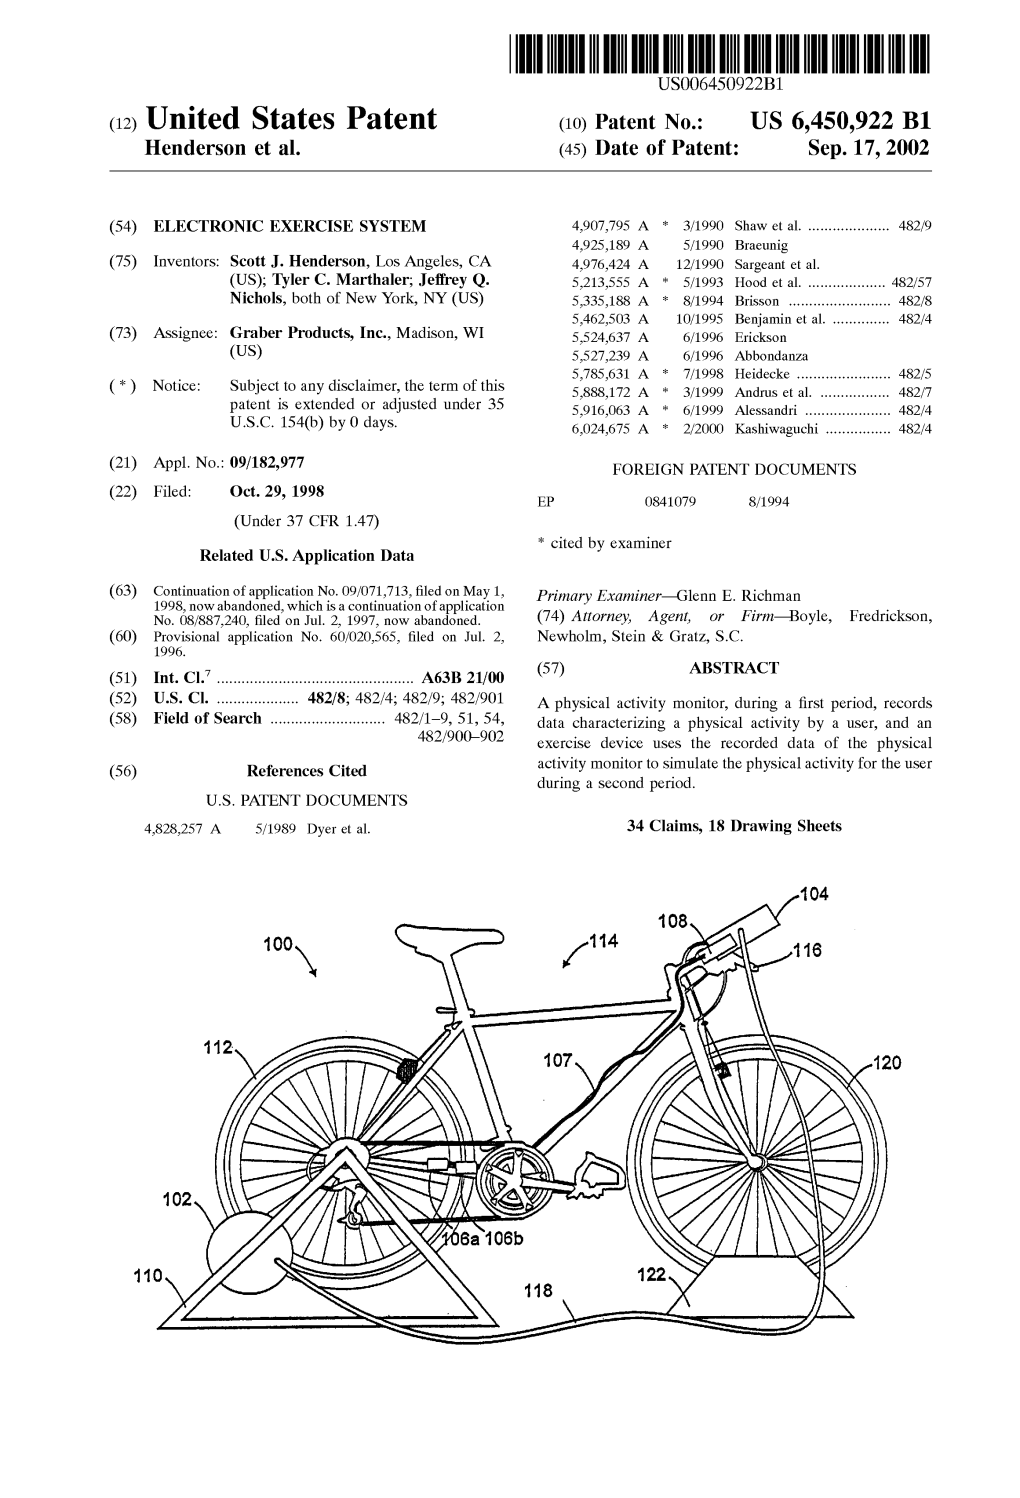 (12) United States Patent (10) Patent No.: US 6,450,922 B1 Henderson Et Al